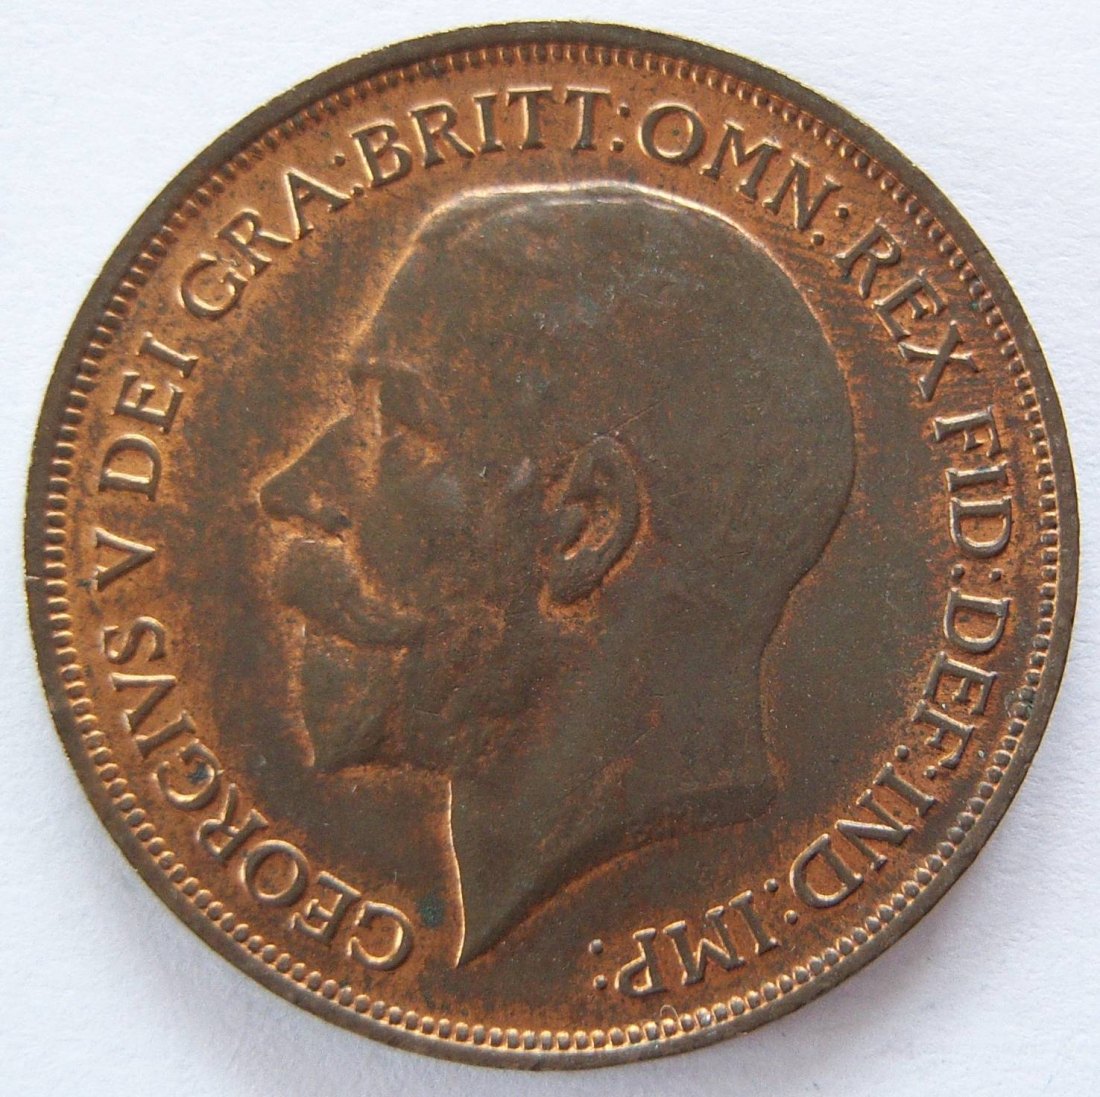  Grossbritannien One 1 Penny 1914 ERHALTUNG !!   